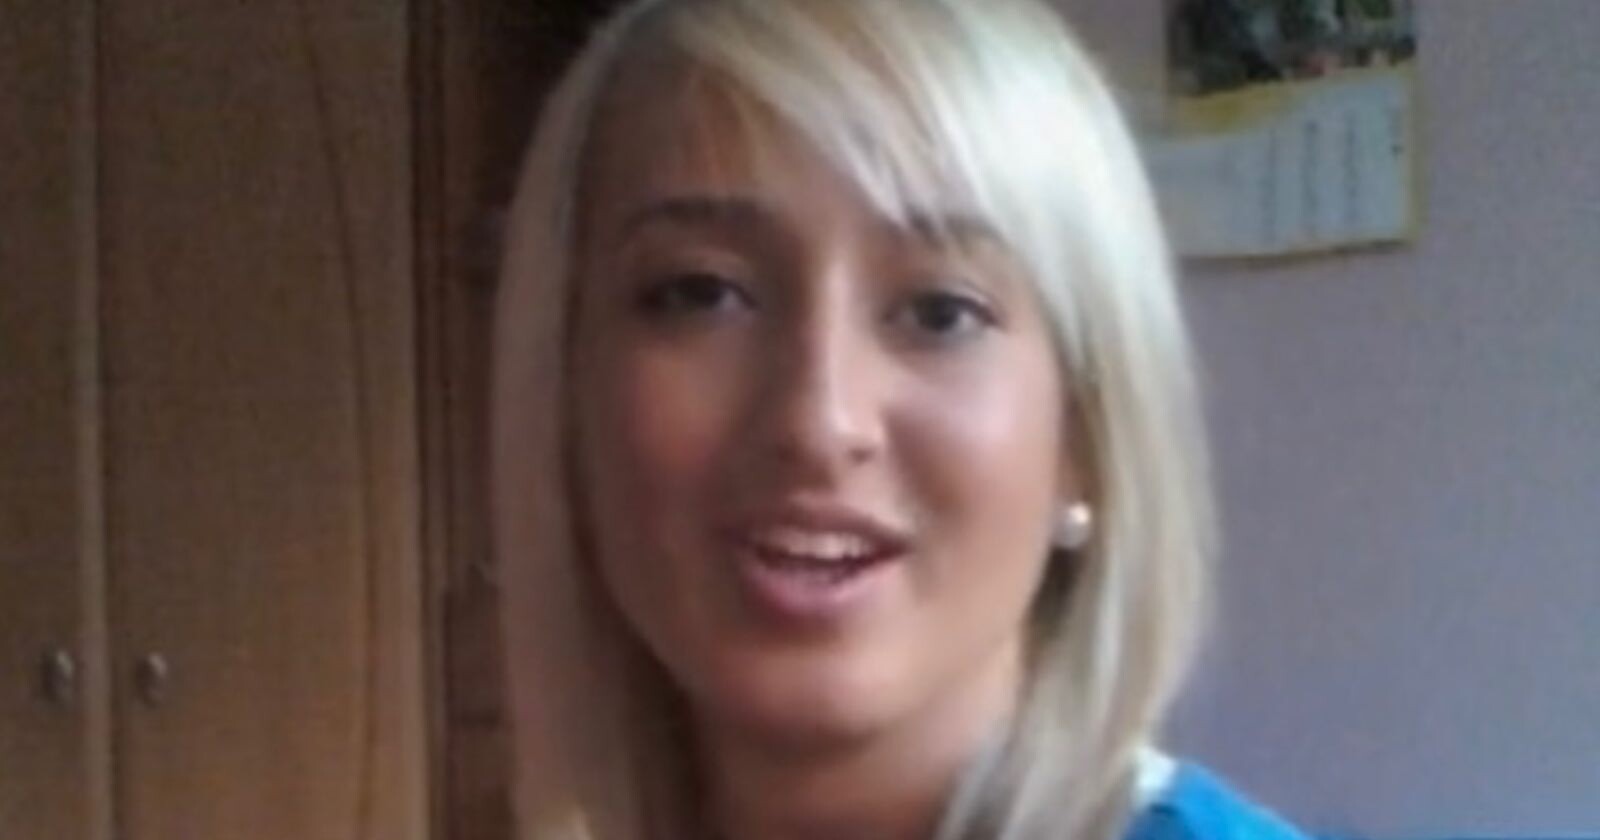  deepfake video missing woman returning condemned 